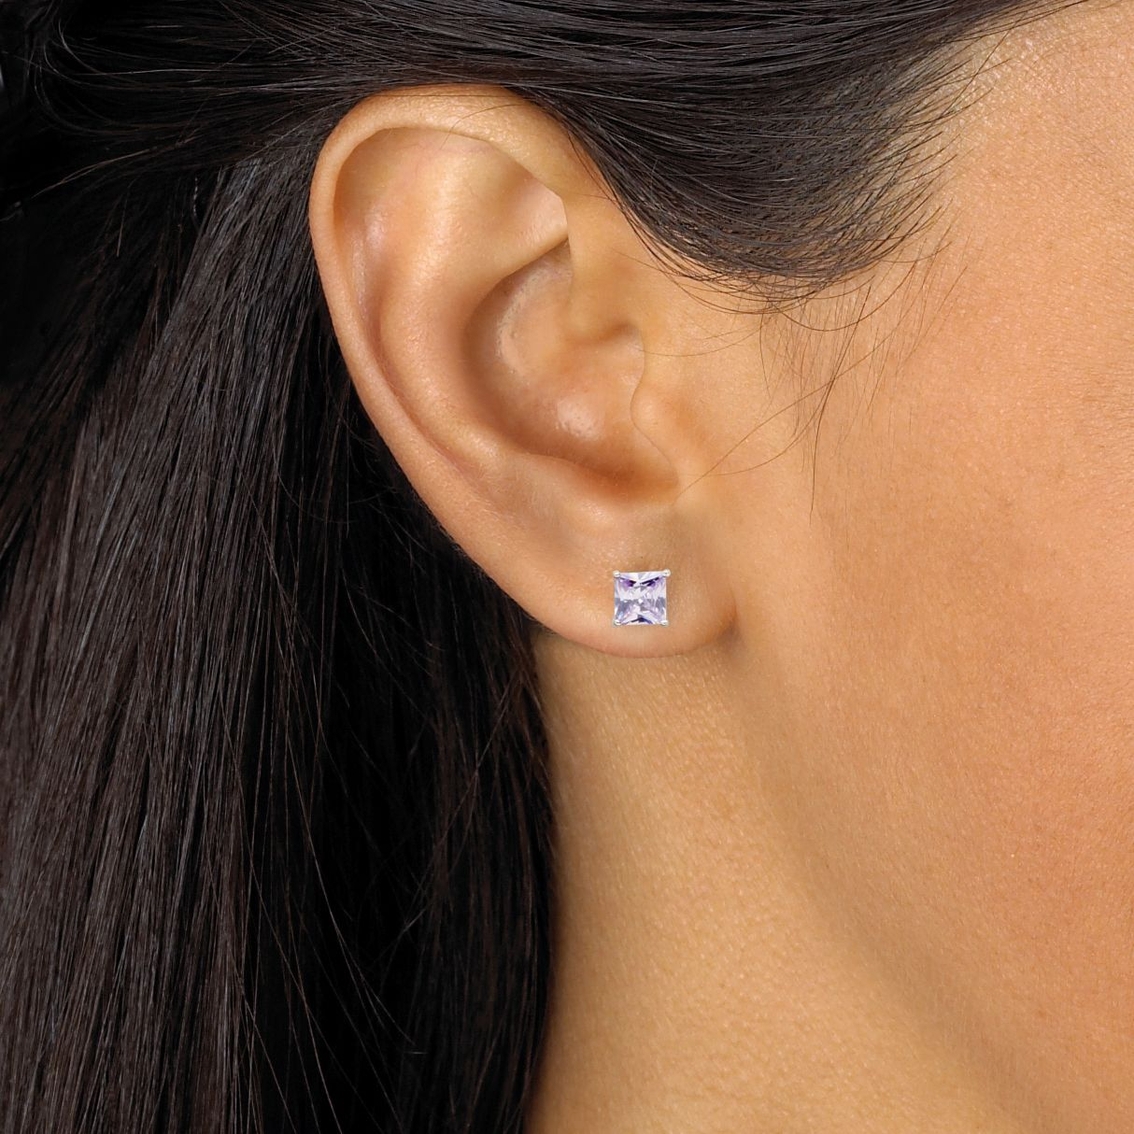 Princess-Cut Simulated Birthstone Stud Earrings in Sterling Silver - Image 3 of 4